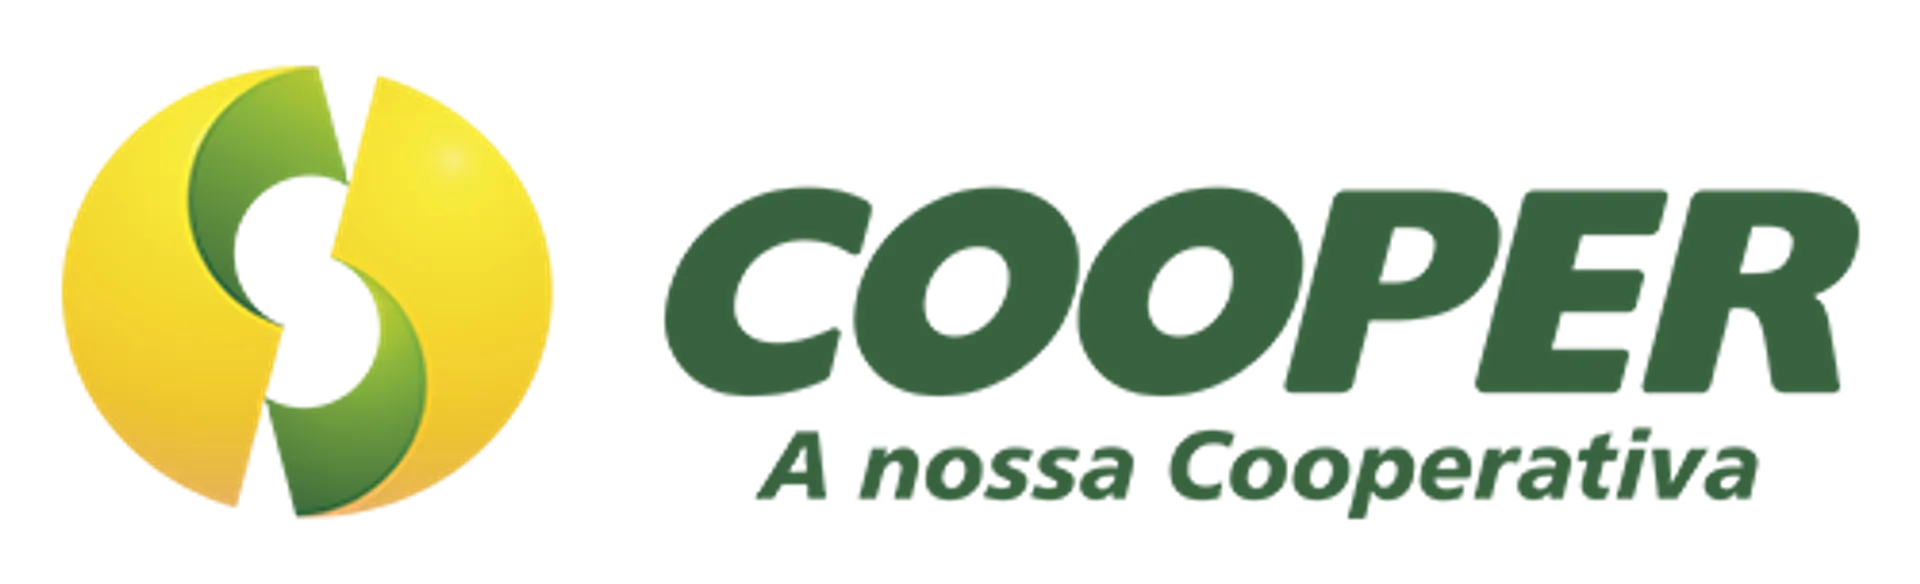 COOPER logo